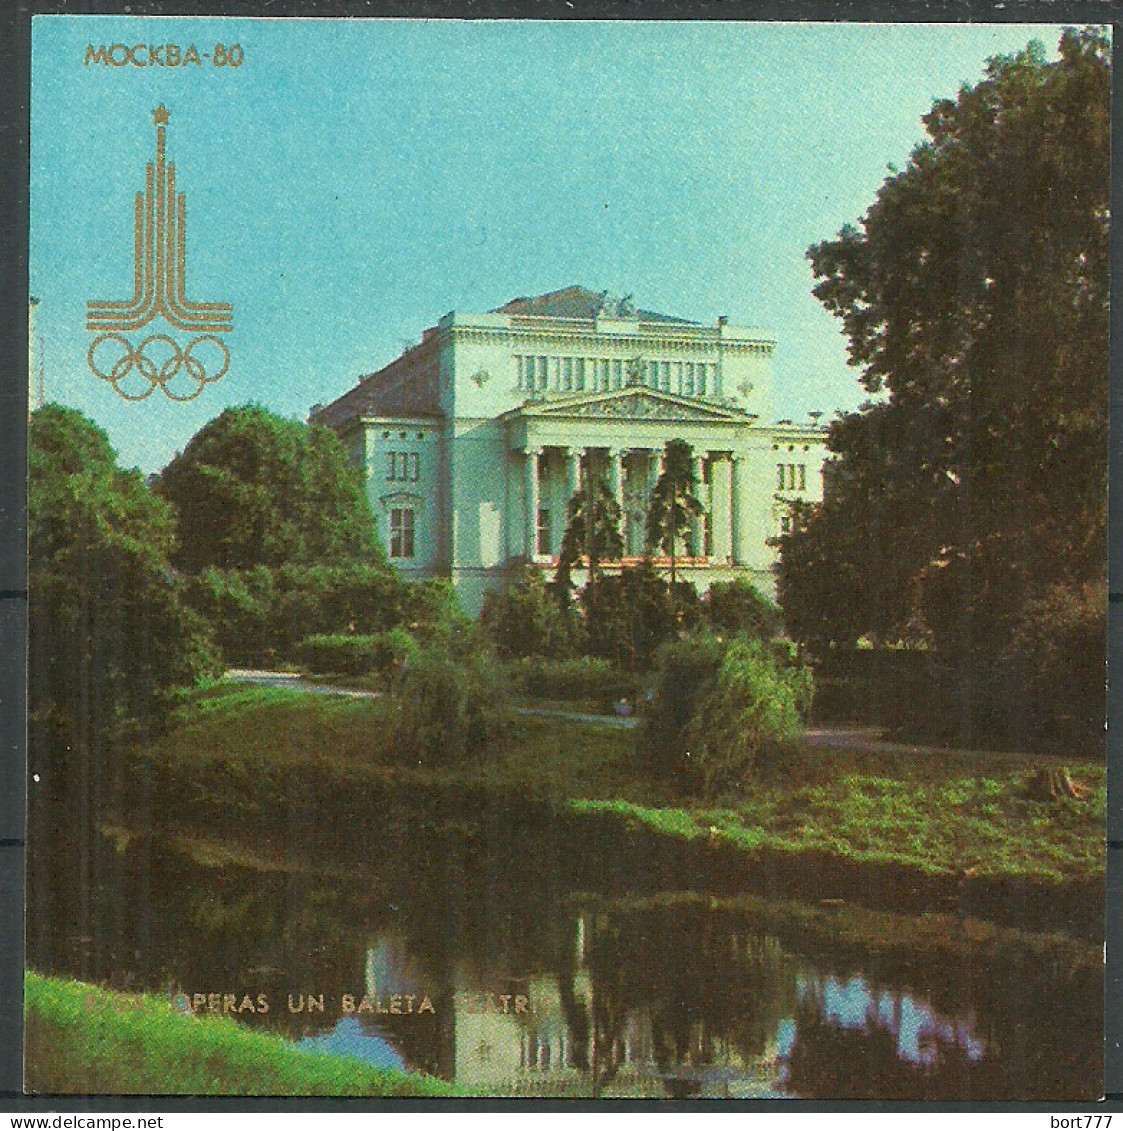 RUSSIA Latvia 1978 Special Matchbox Label 93x93 Mm (catalog # 392) - Luciferdozen - Etiketten